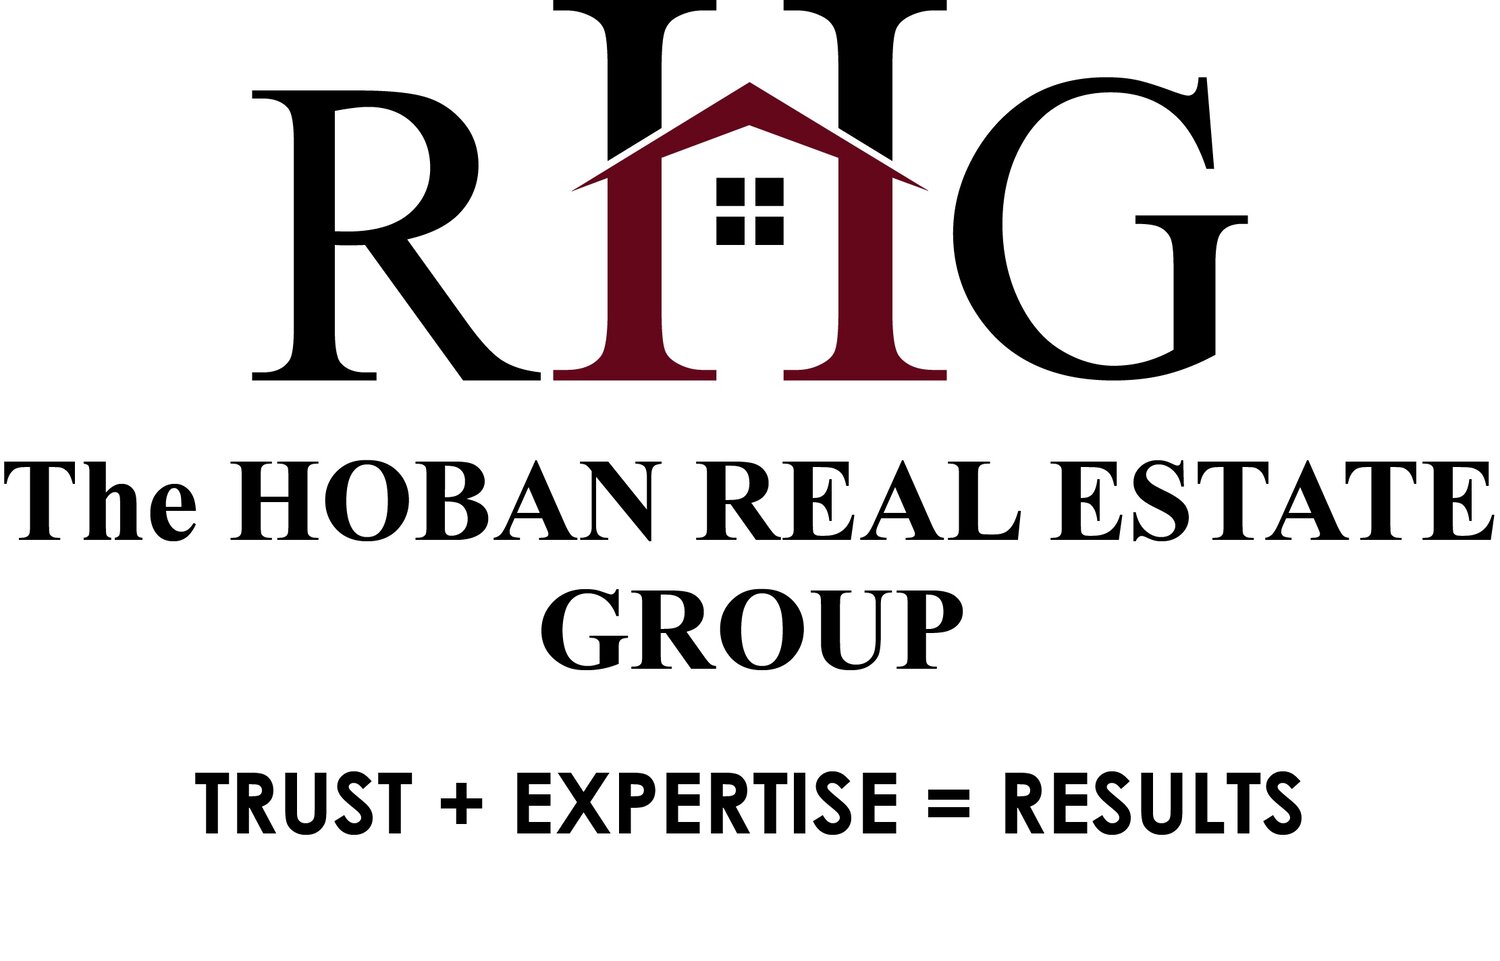 The Hoban Real Estate Group